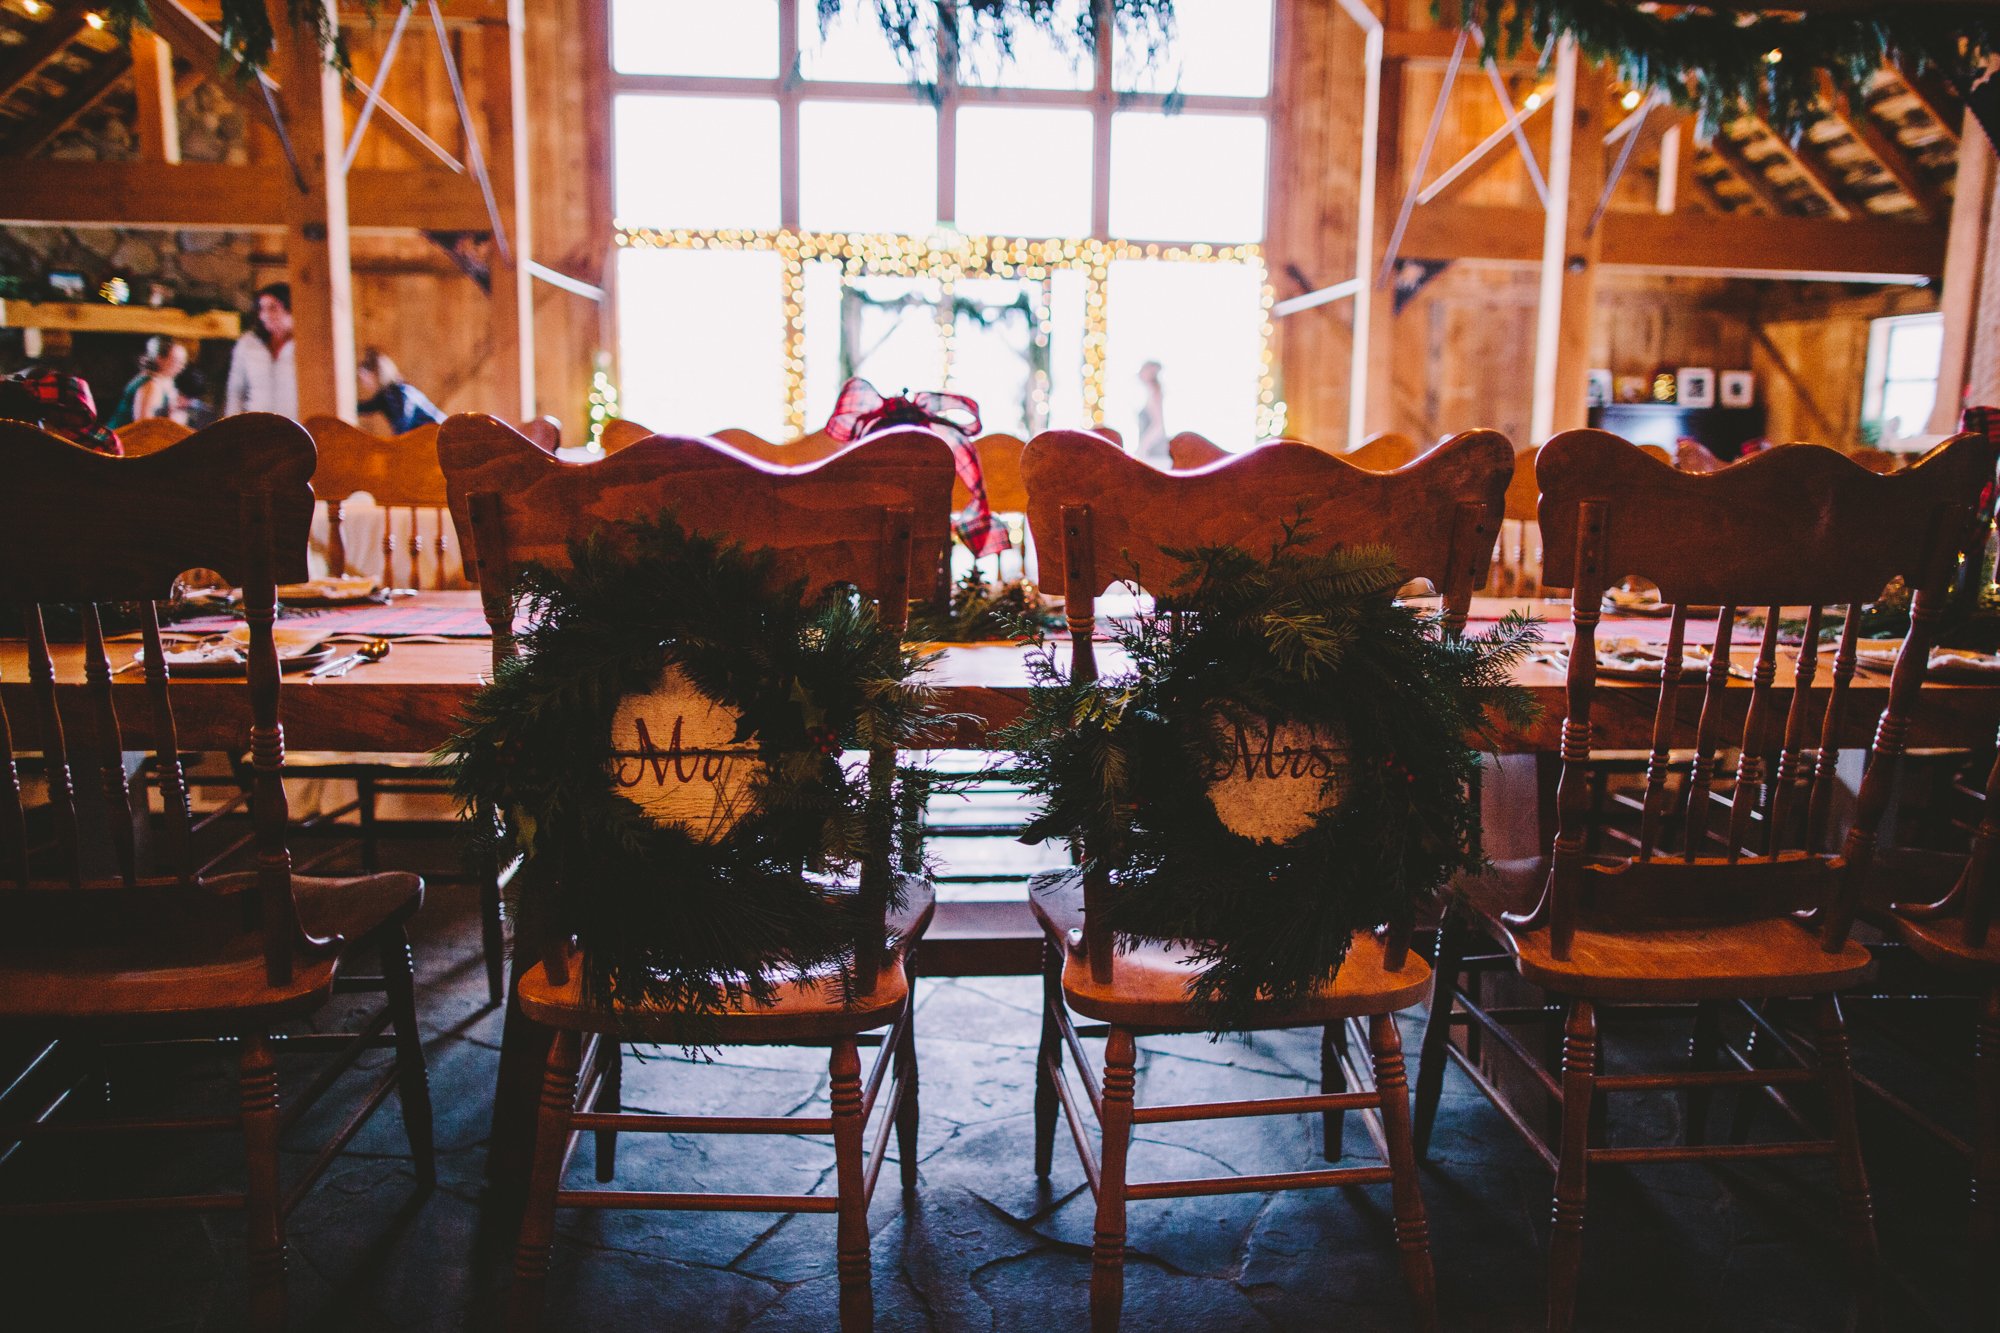 Cattle Barn Wedding in the Christmas Winter Snow | Cle Elum Wedding | Pacific Northwest Winter Wedding | Christmas Themed Wedding | Tida Svy Photography | www.tidasvy.com